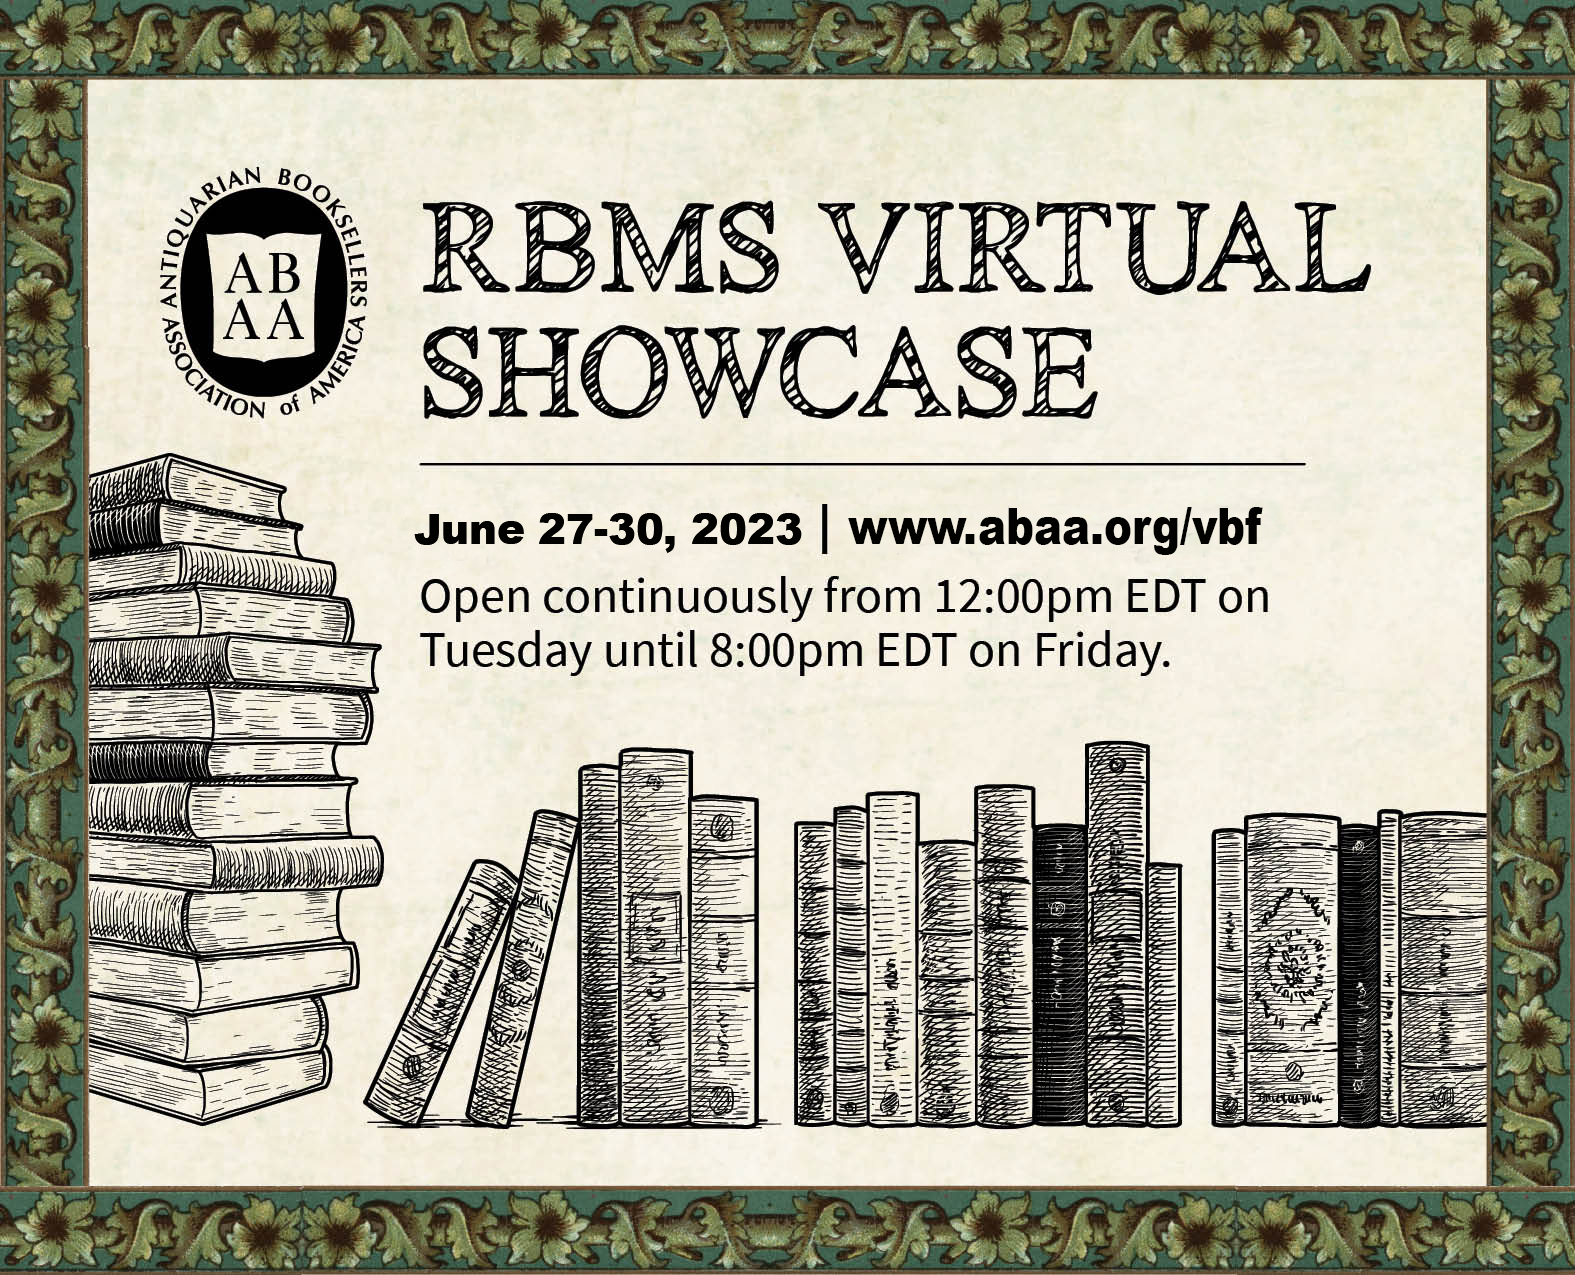 RBMS Virual Showcase 2023